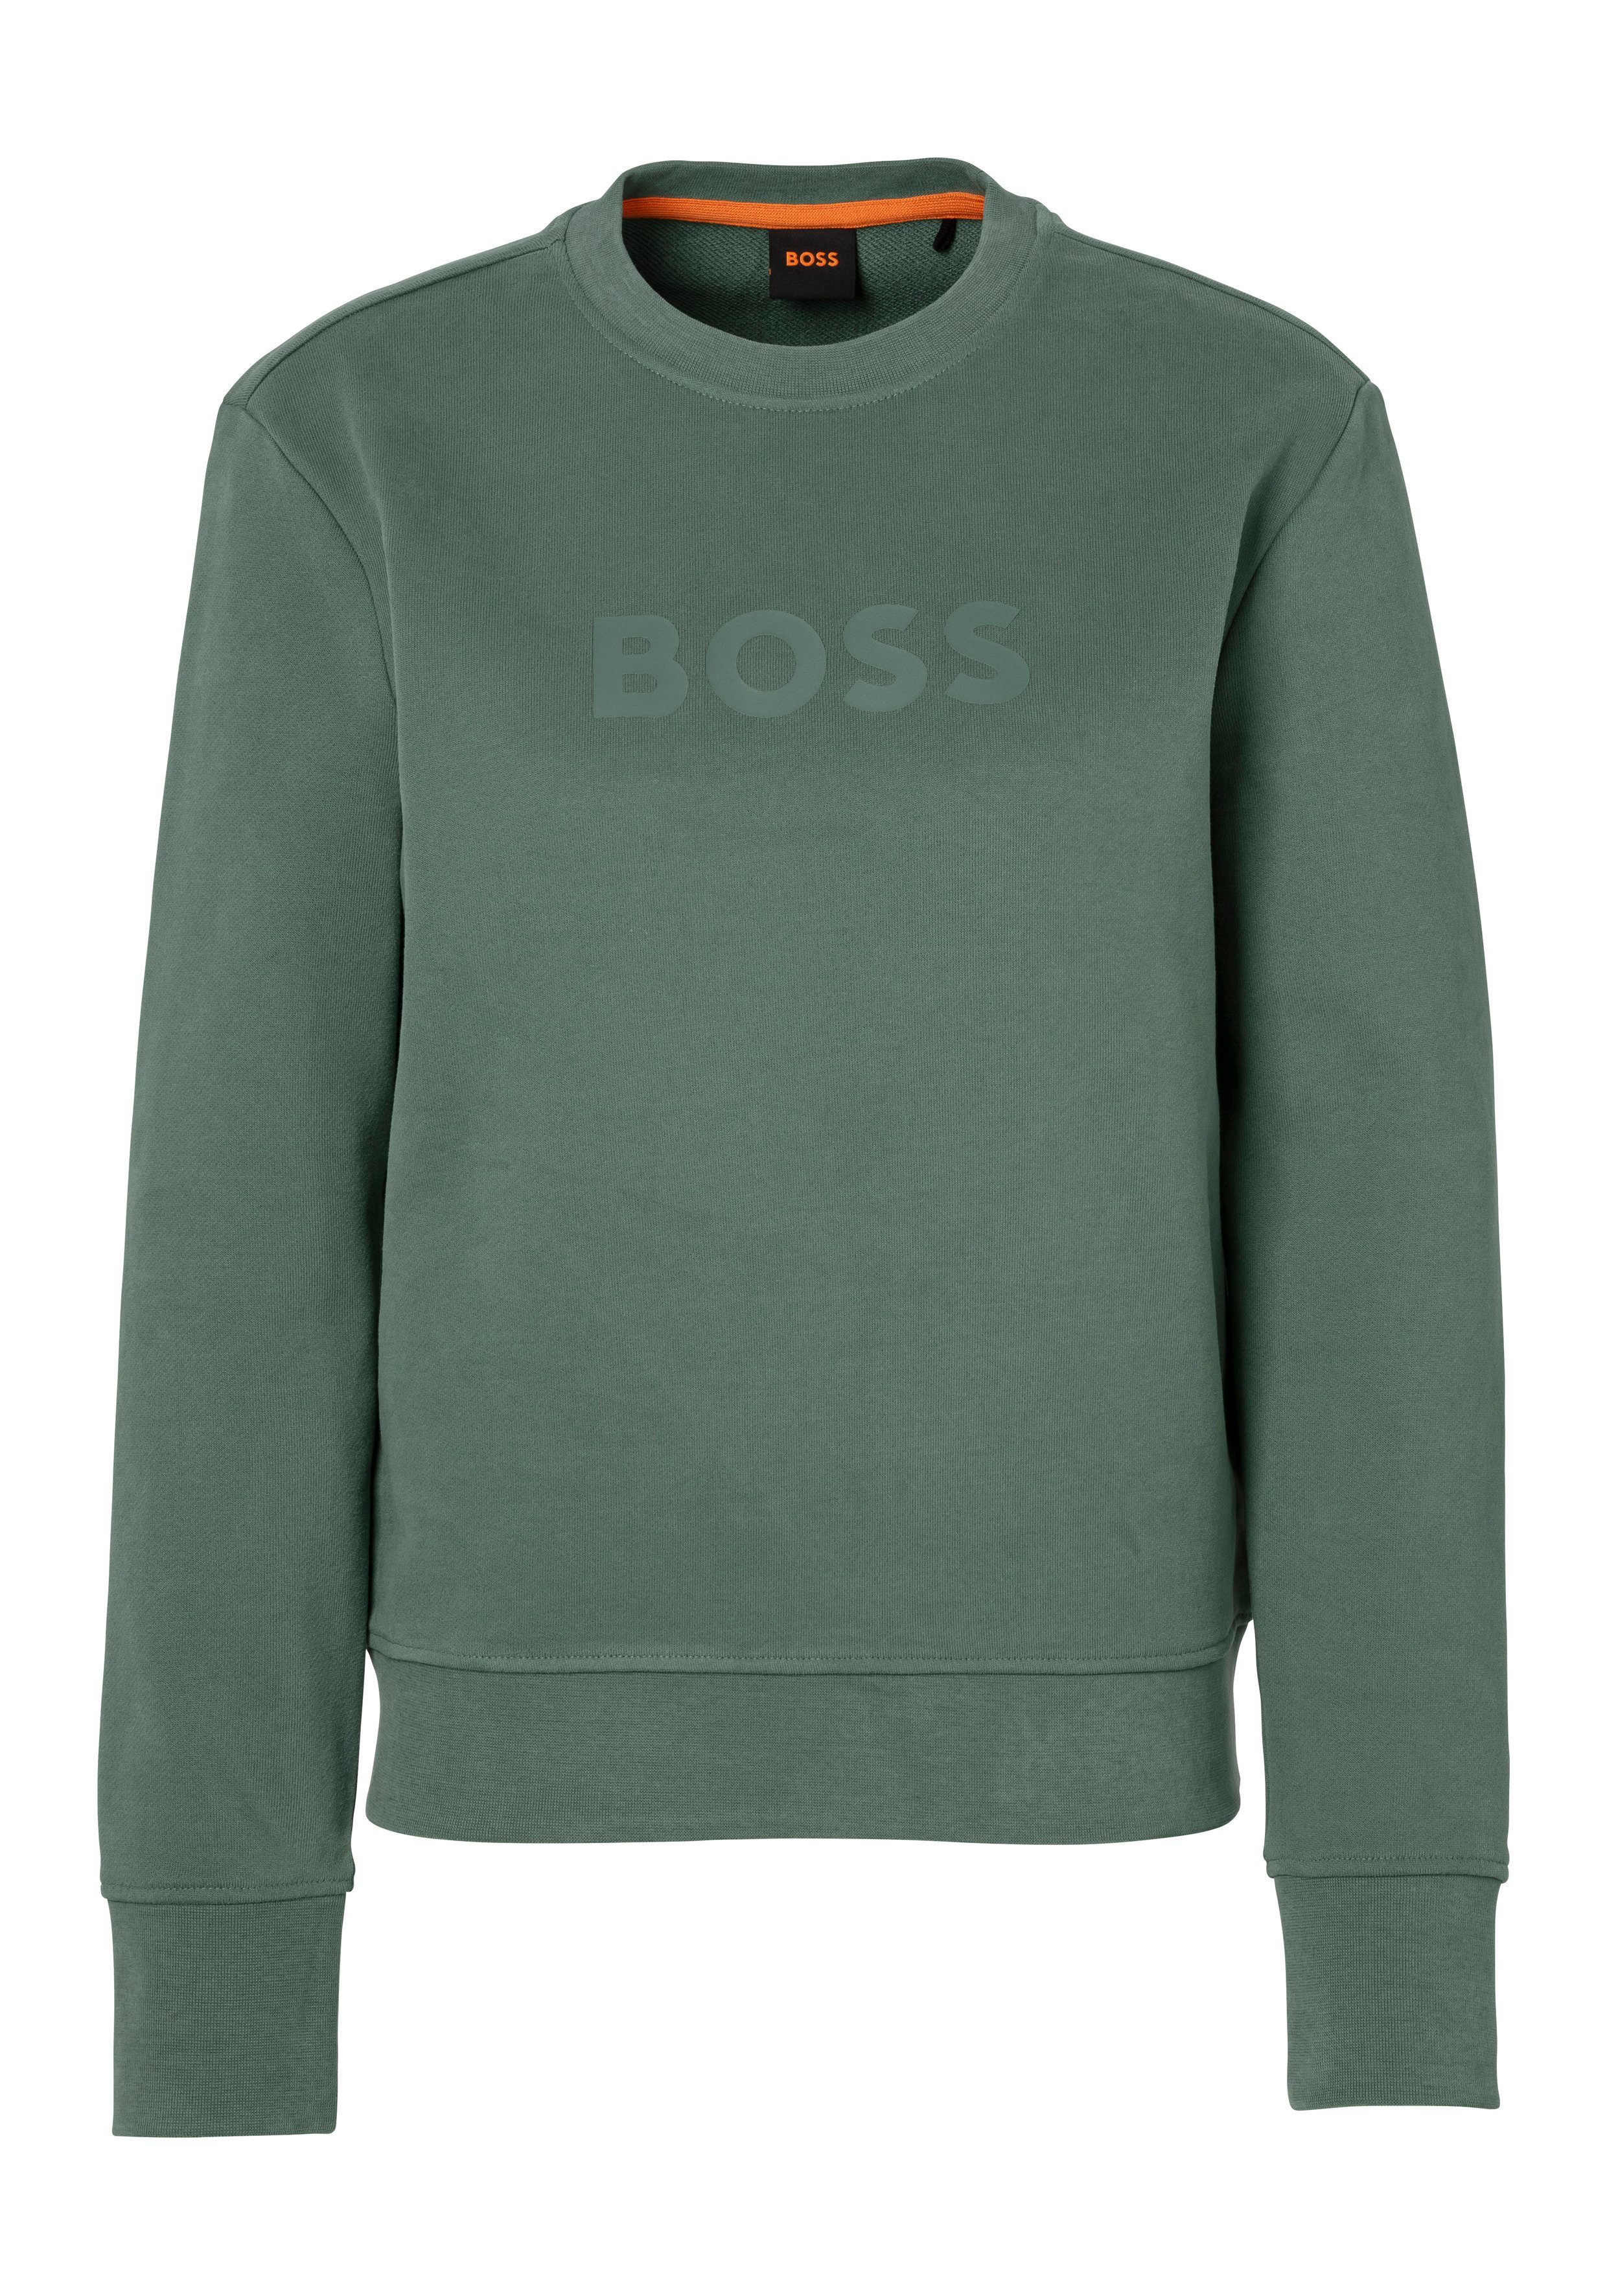 Boss Orange Sweatshirt C_Elaboss_6 Premium damesmode